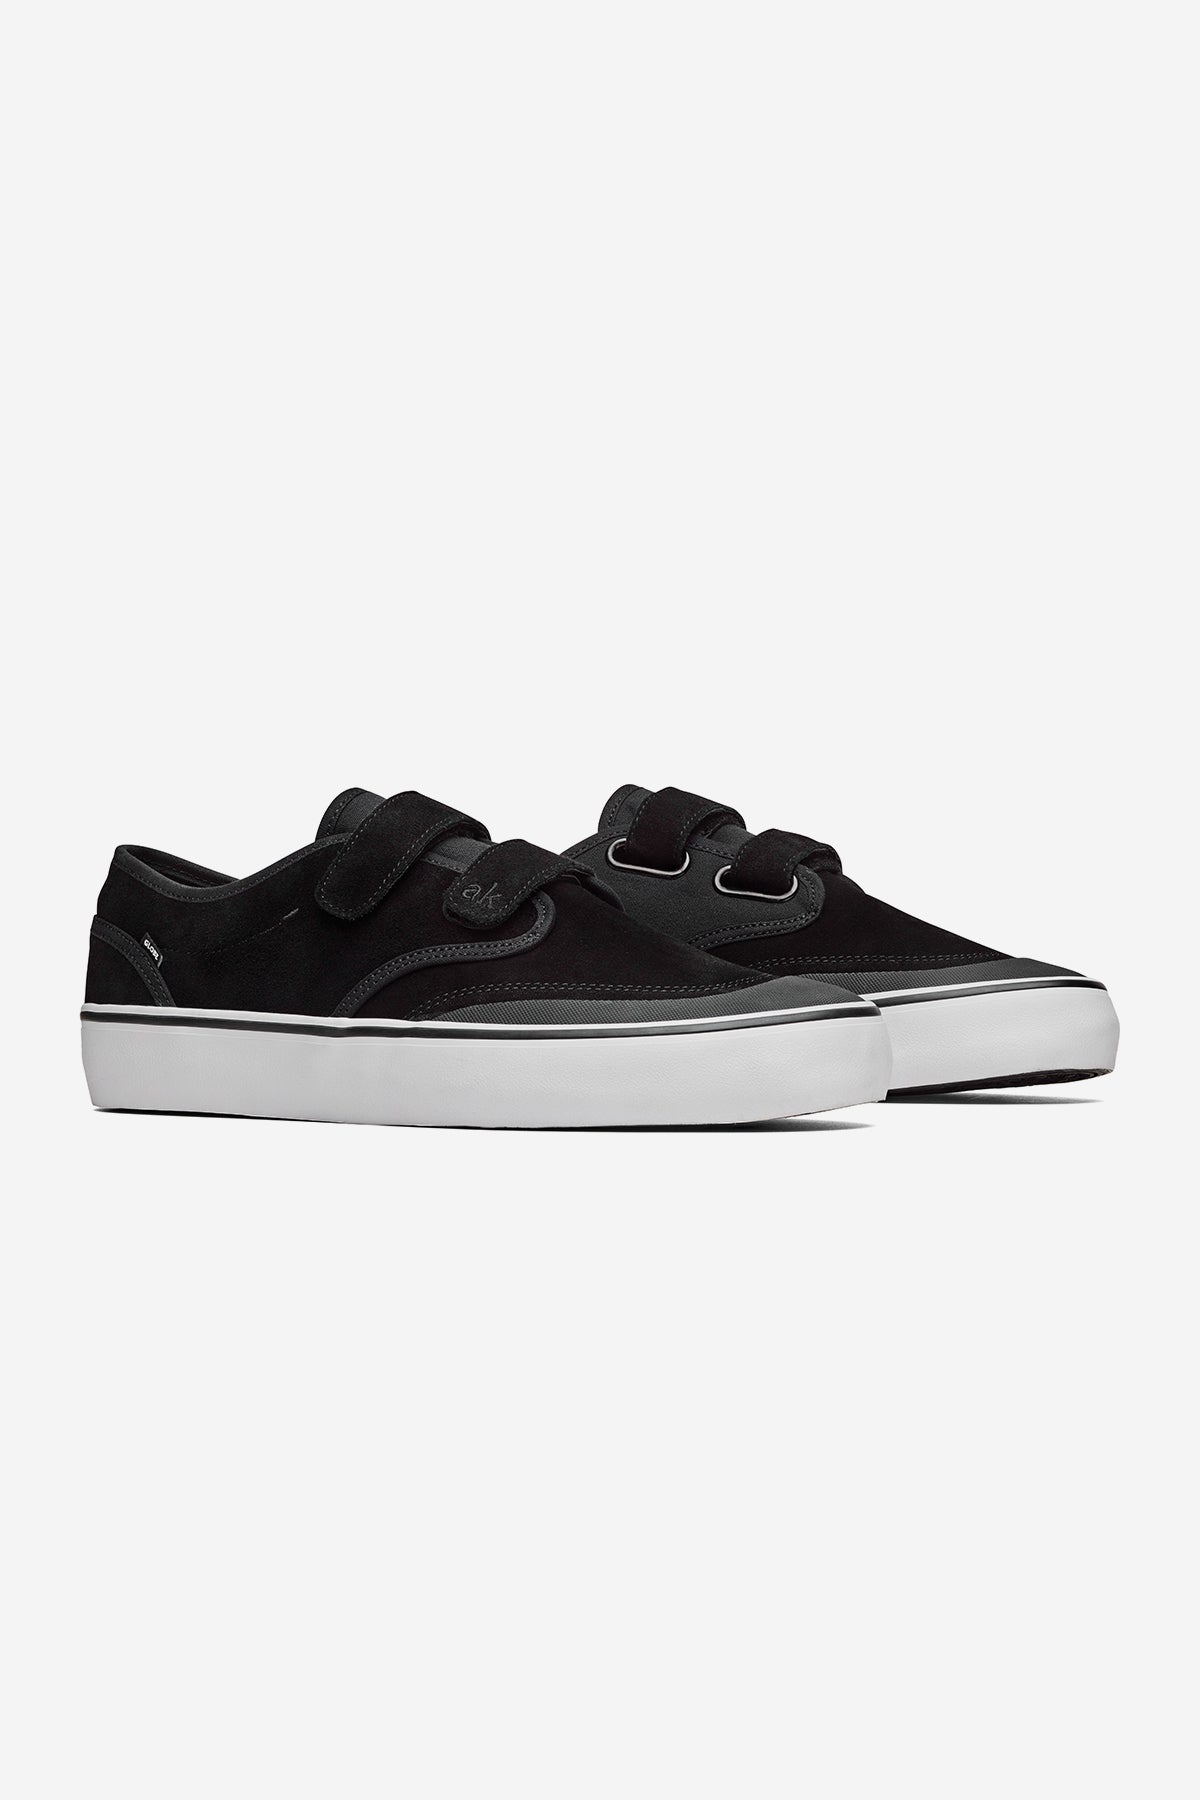 Motley II Strap Black/White skate shoes